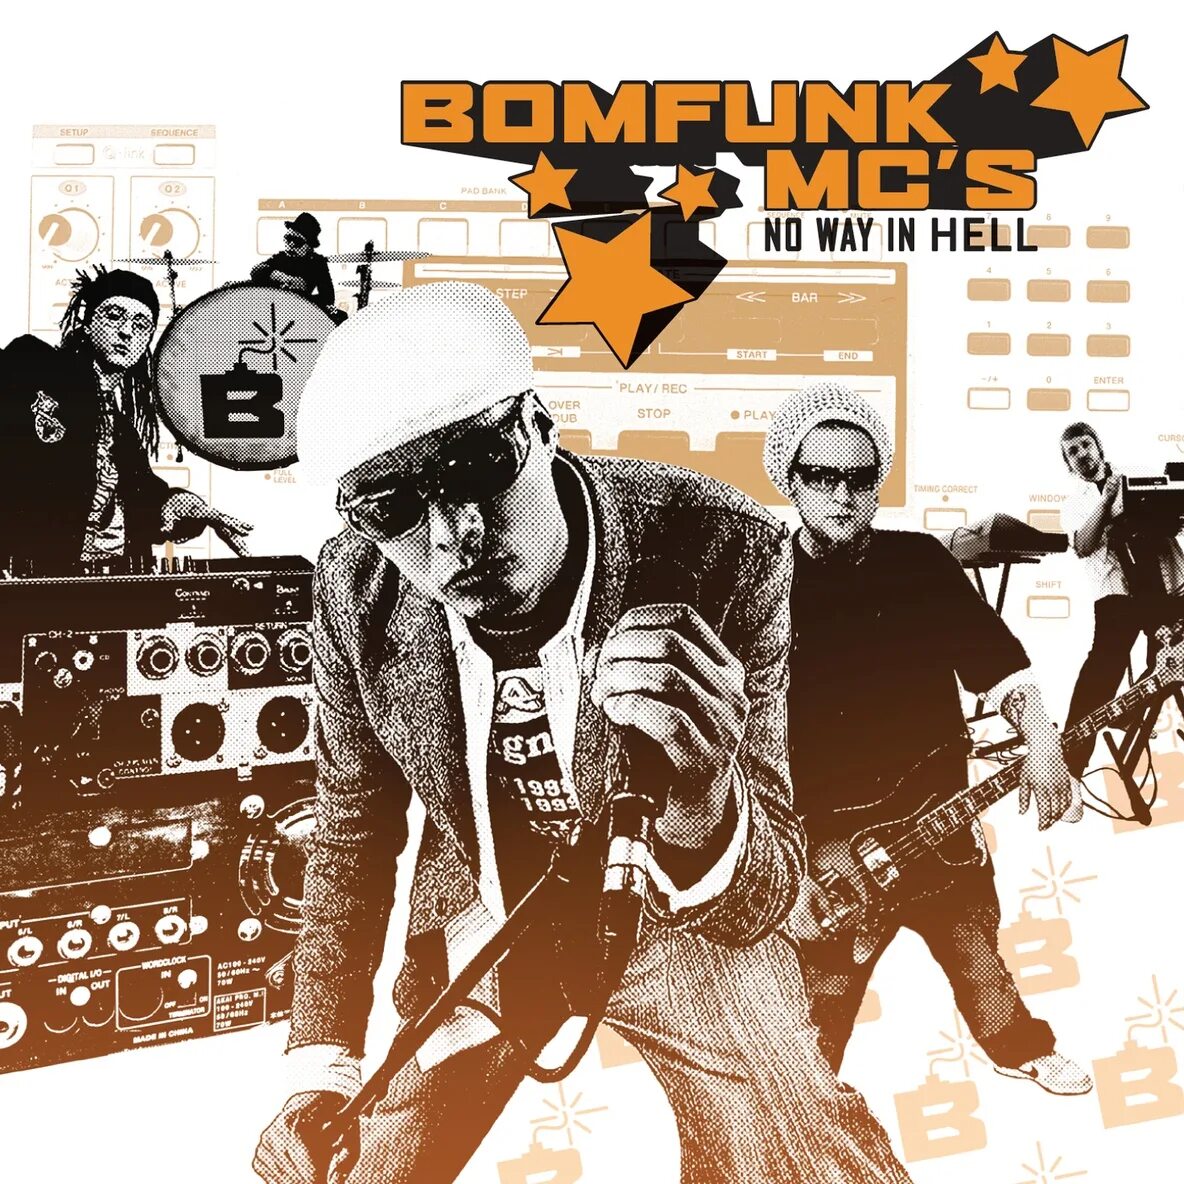 Бомфанк мс слушать. Bomfunk MC'S. Bomfunk MC'S обложка. Bomfunk MC'S - Burnin' Sneakers обложка. Bomfunk MC'S фото.